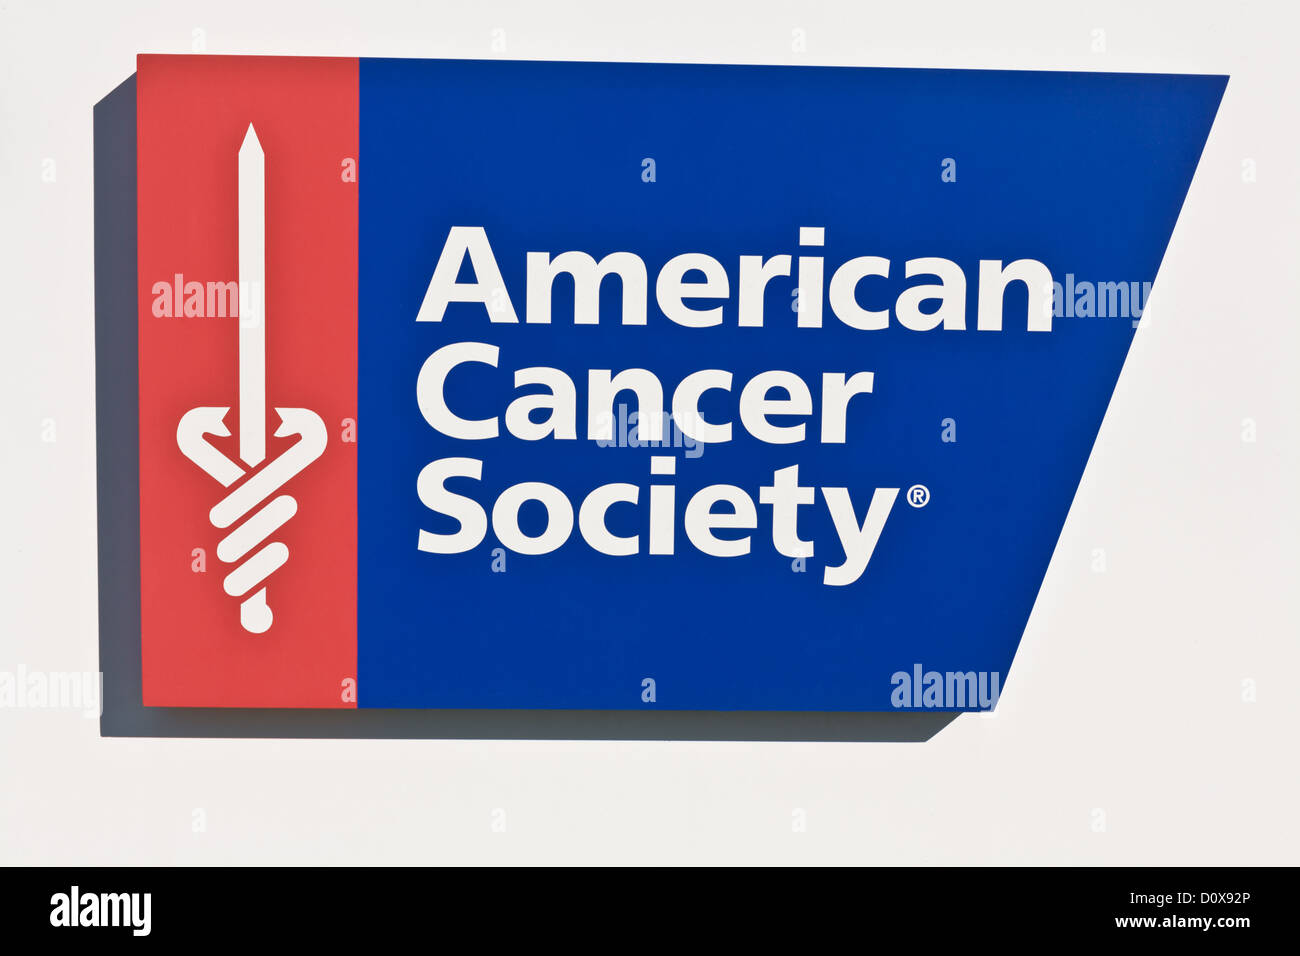 American Cancer Society logo on a sign, USA Stock Photo